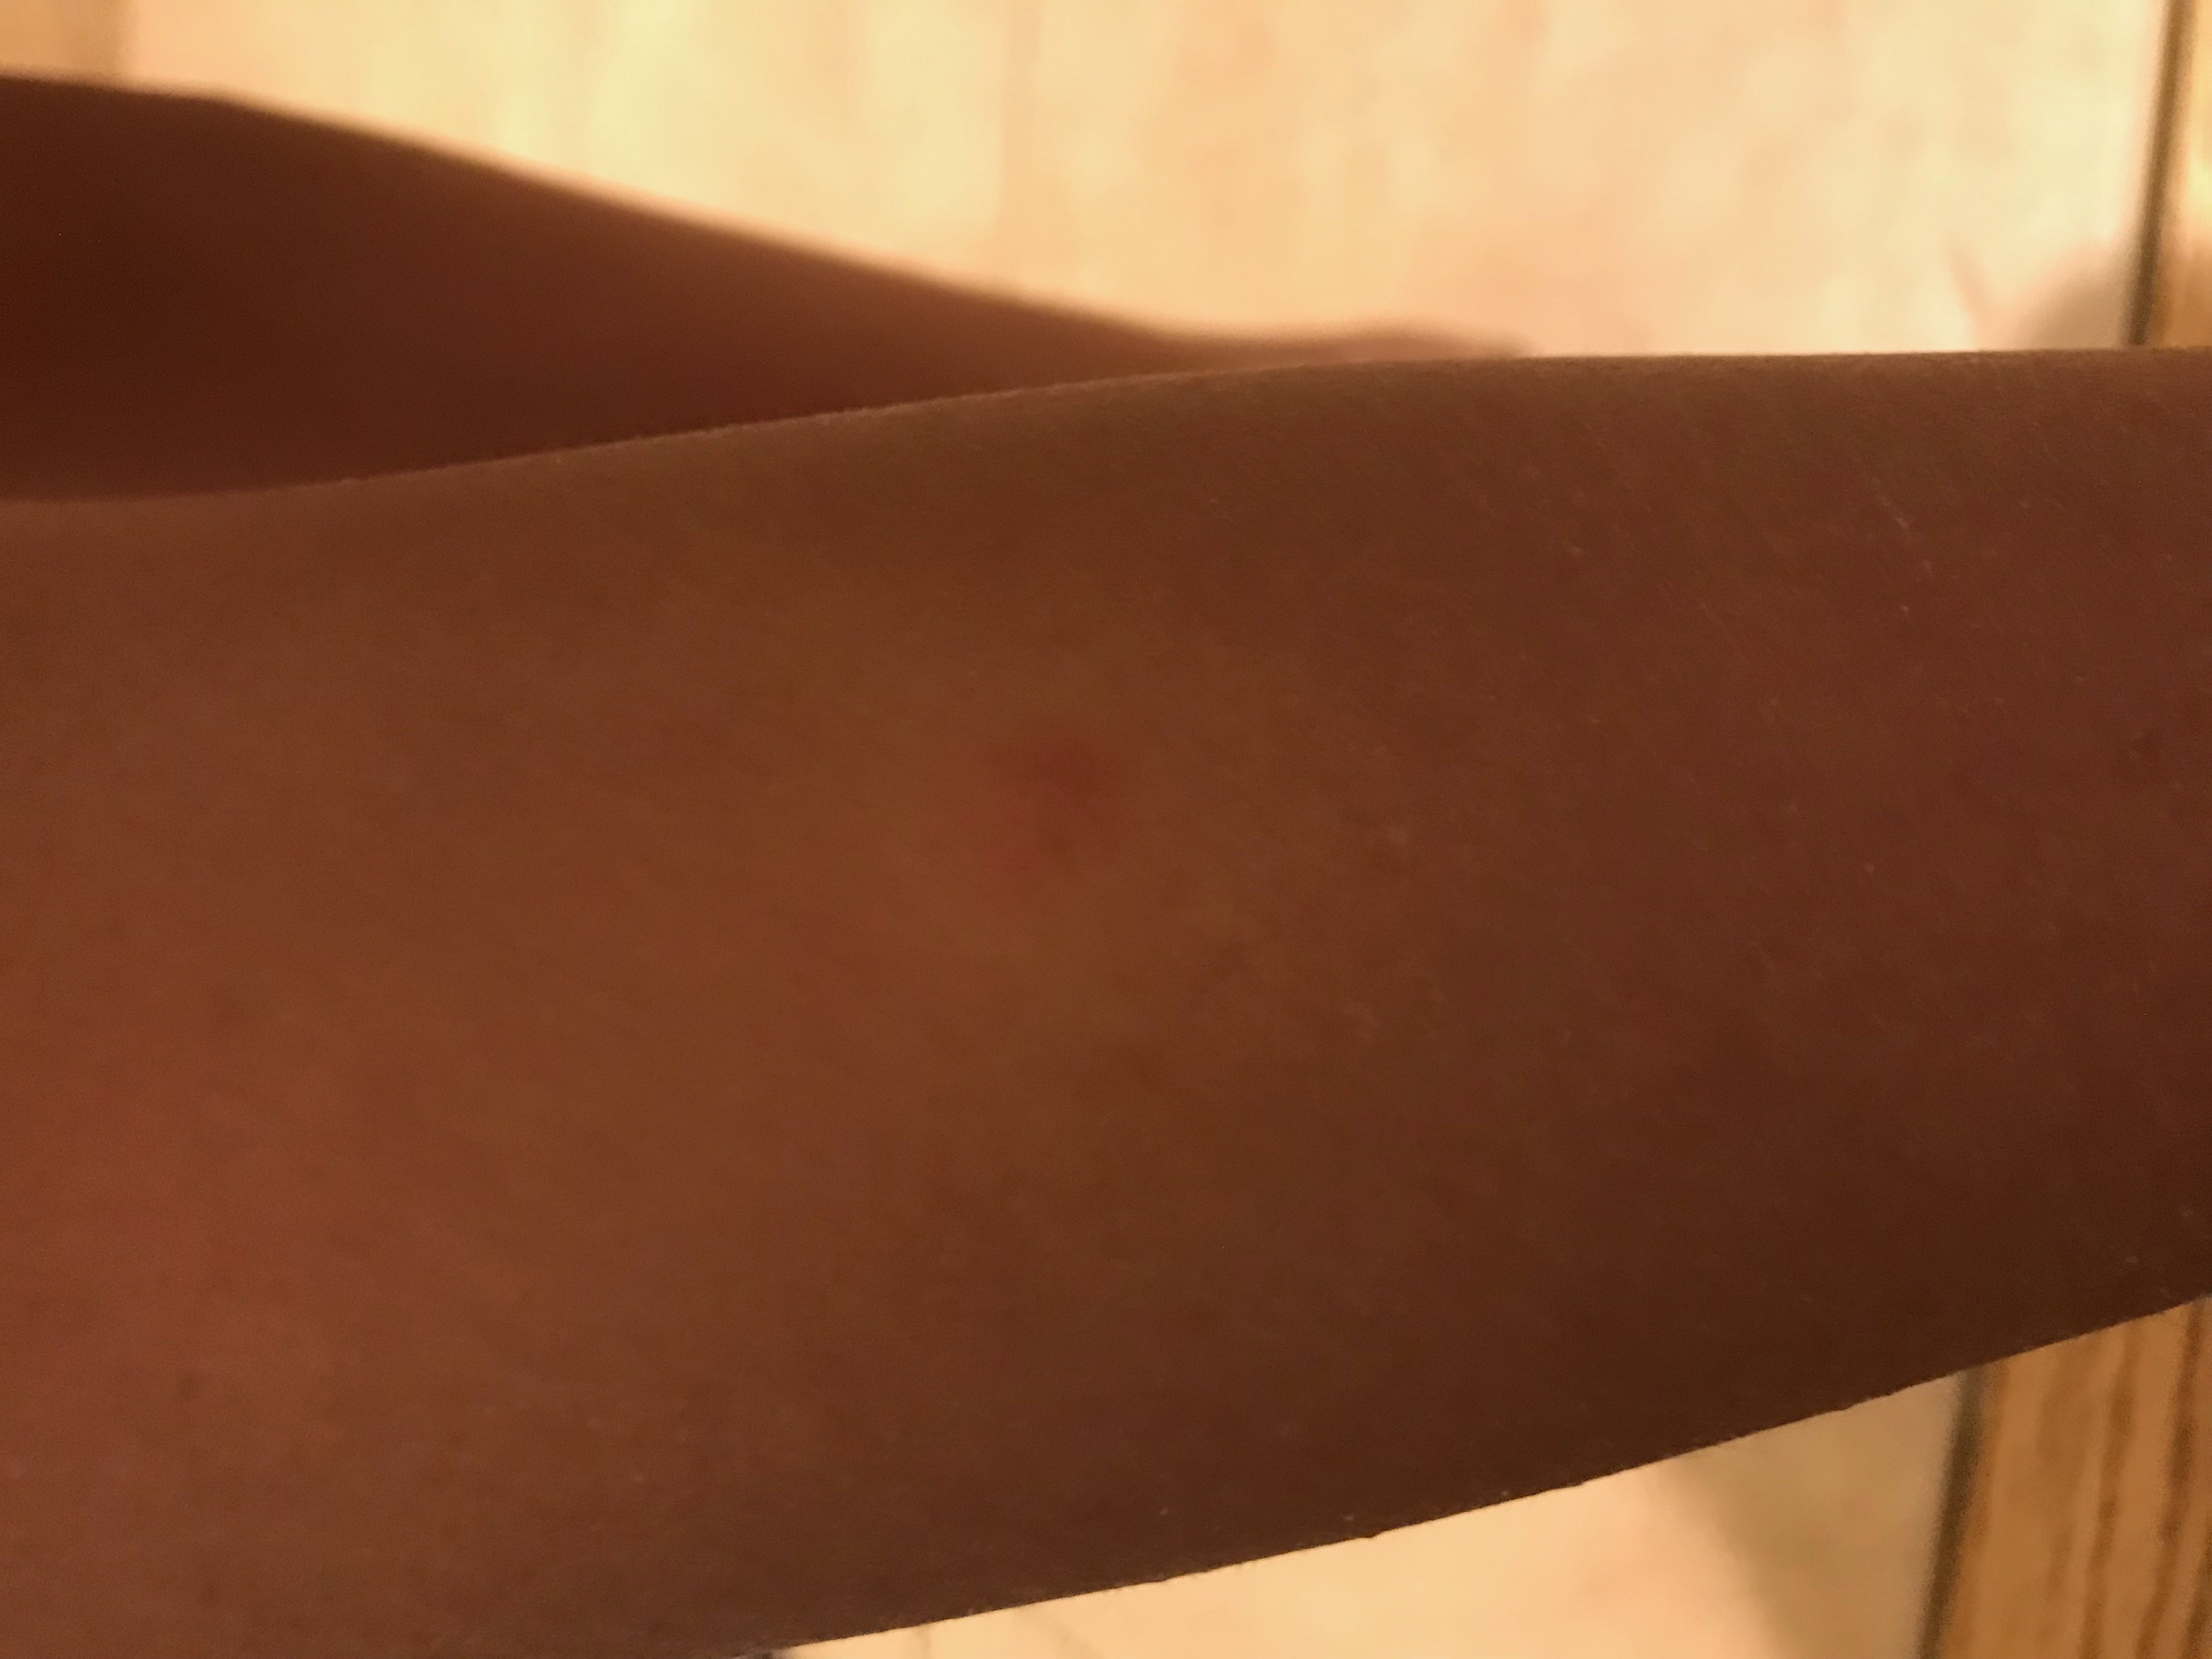 Bug bite on leg from BW hotel